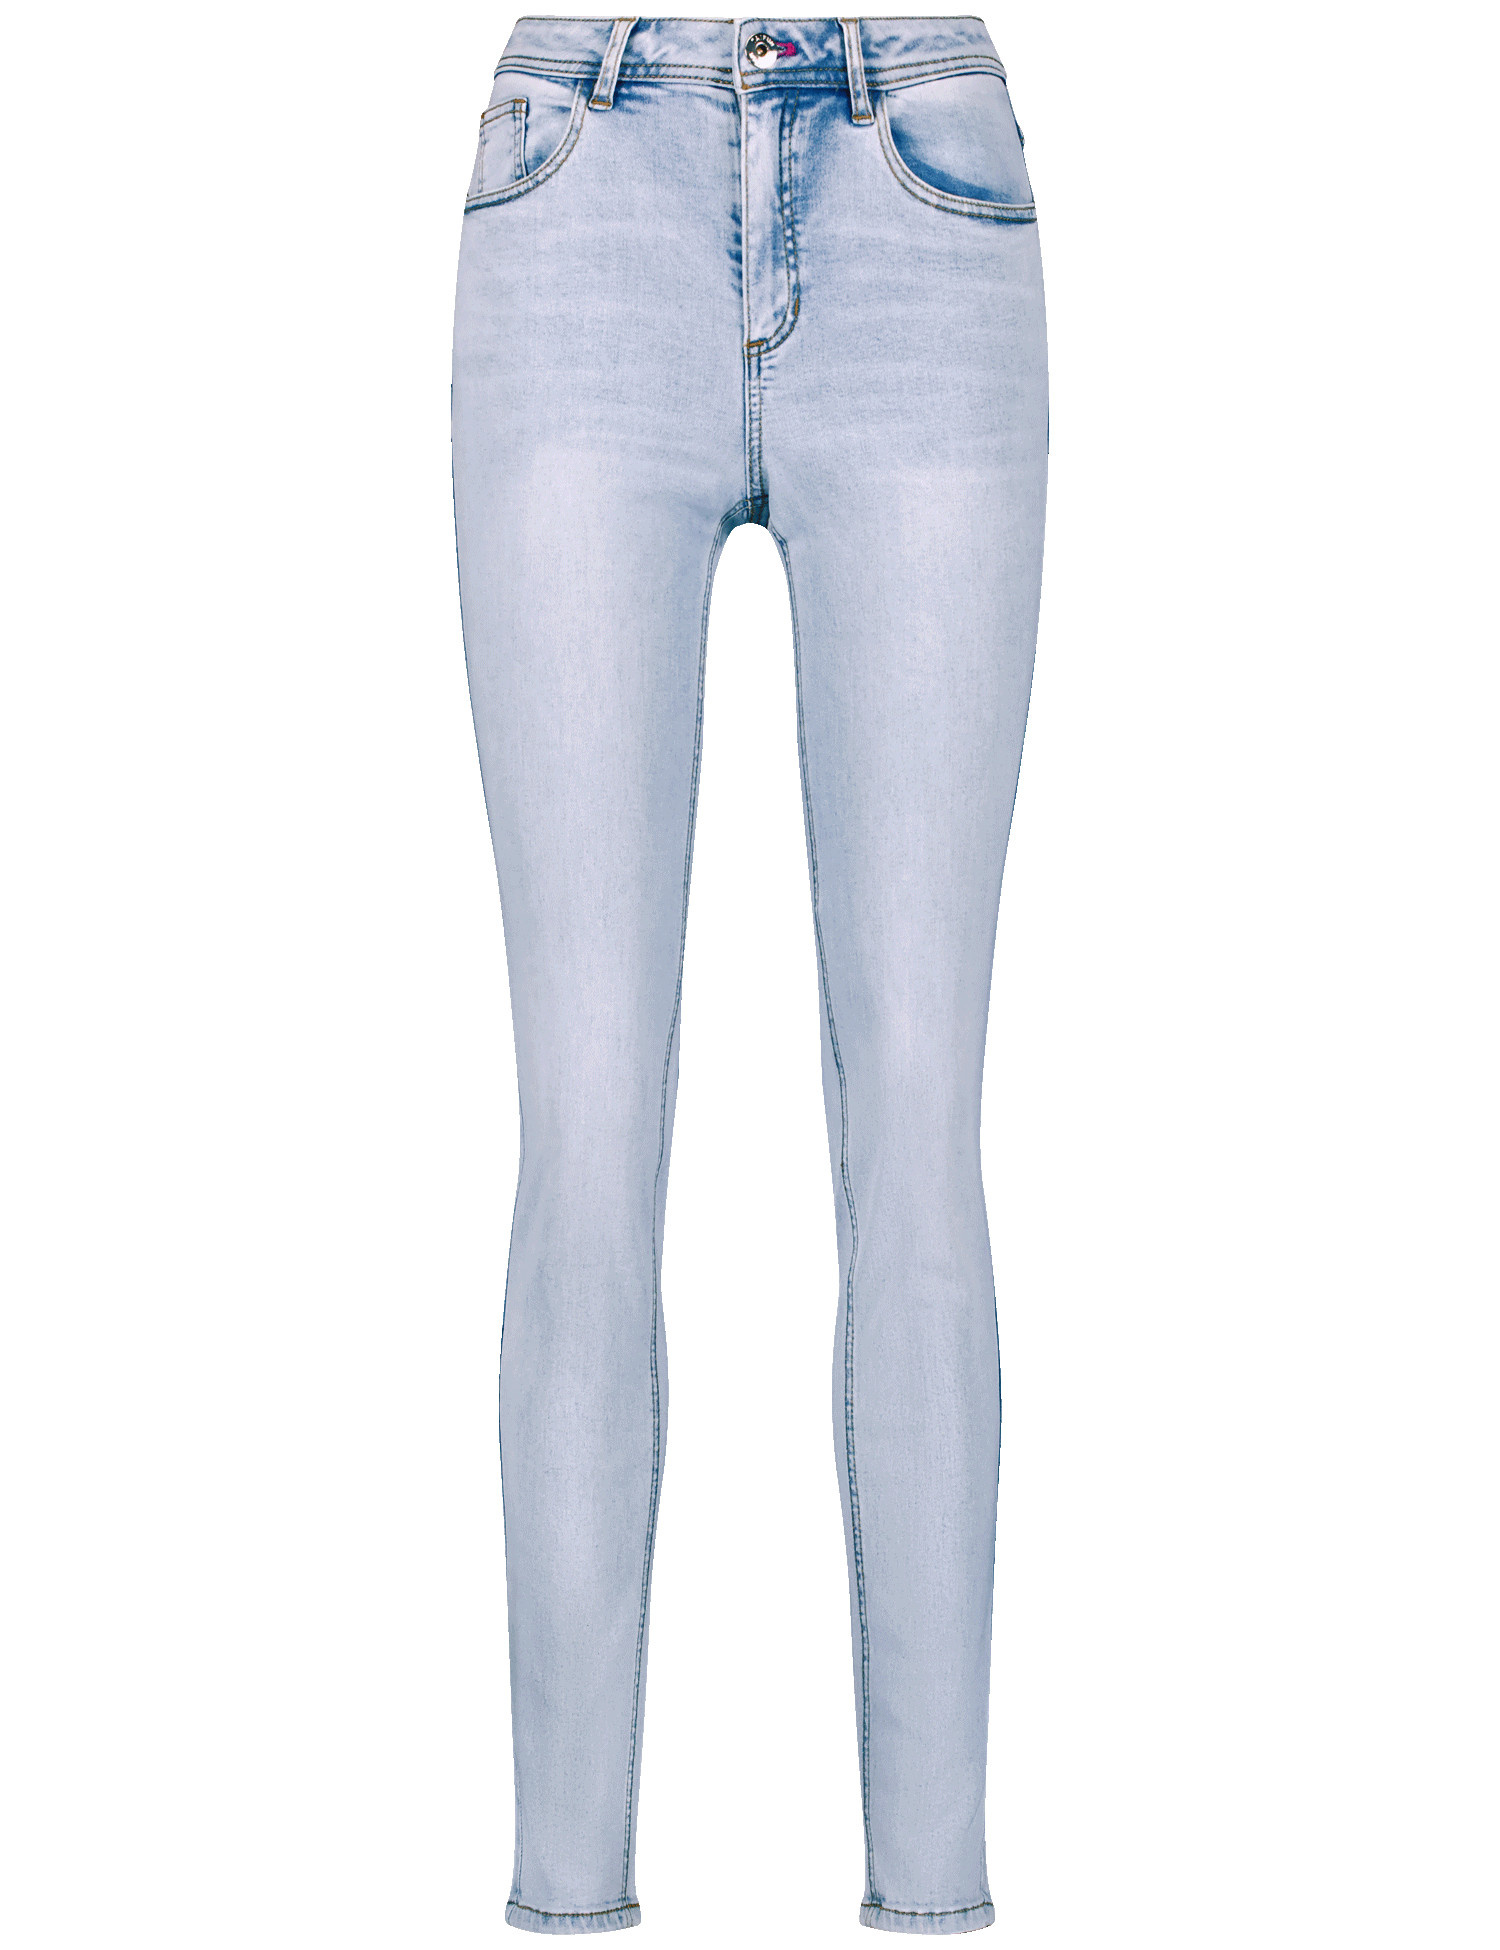 TAIFUN Damen Skinny Jeans Baumwolle Blau, 38 von Taifun